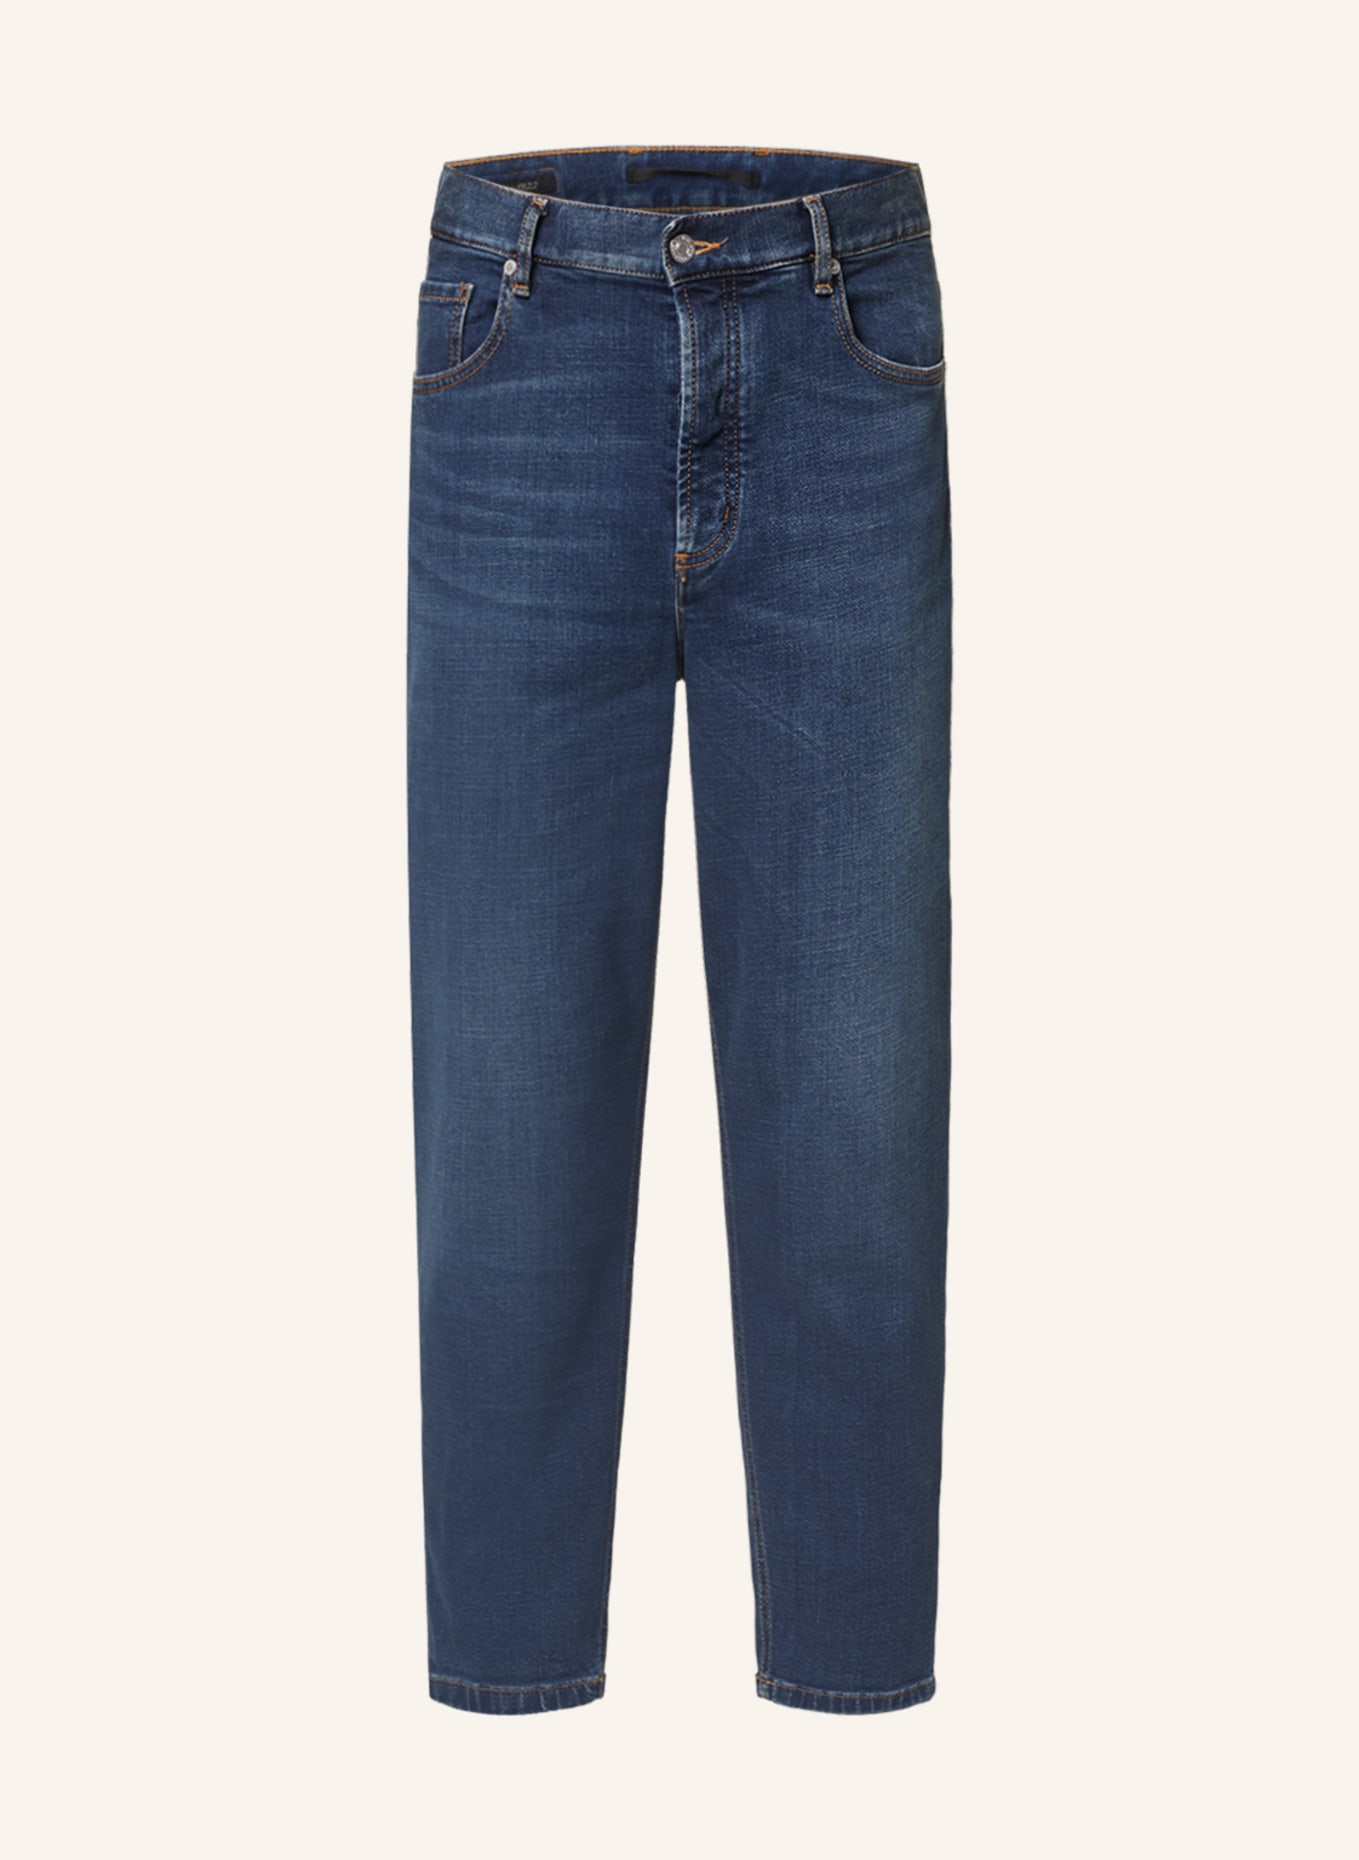 ALBERTO Jeans JIVE Comfort Fit, Farbe: 880 (Bild 1)